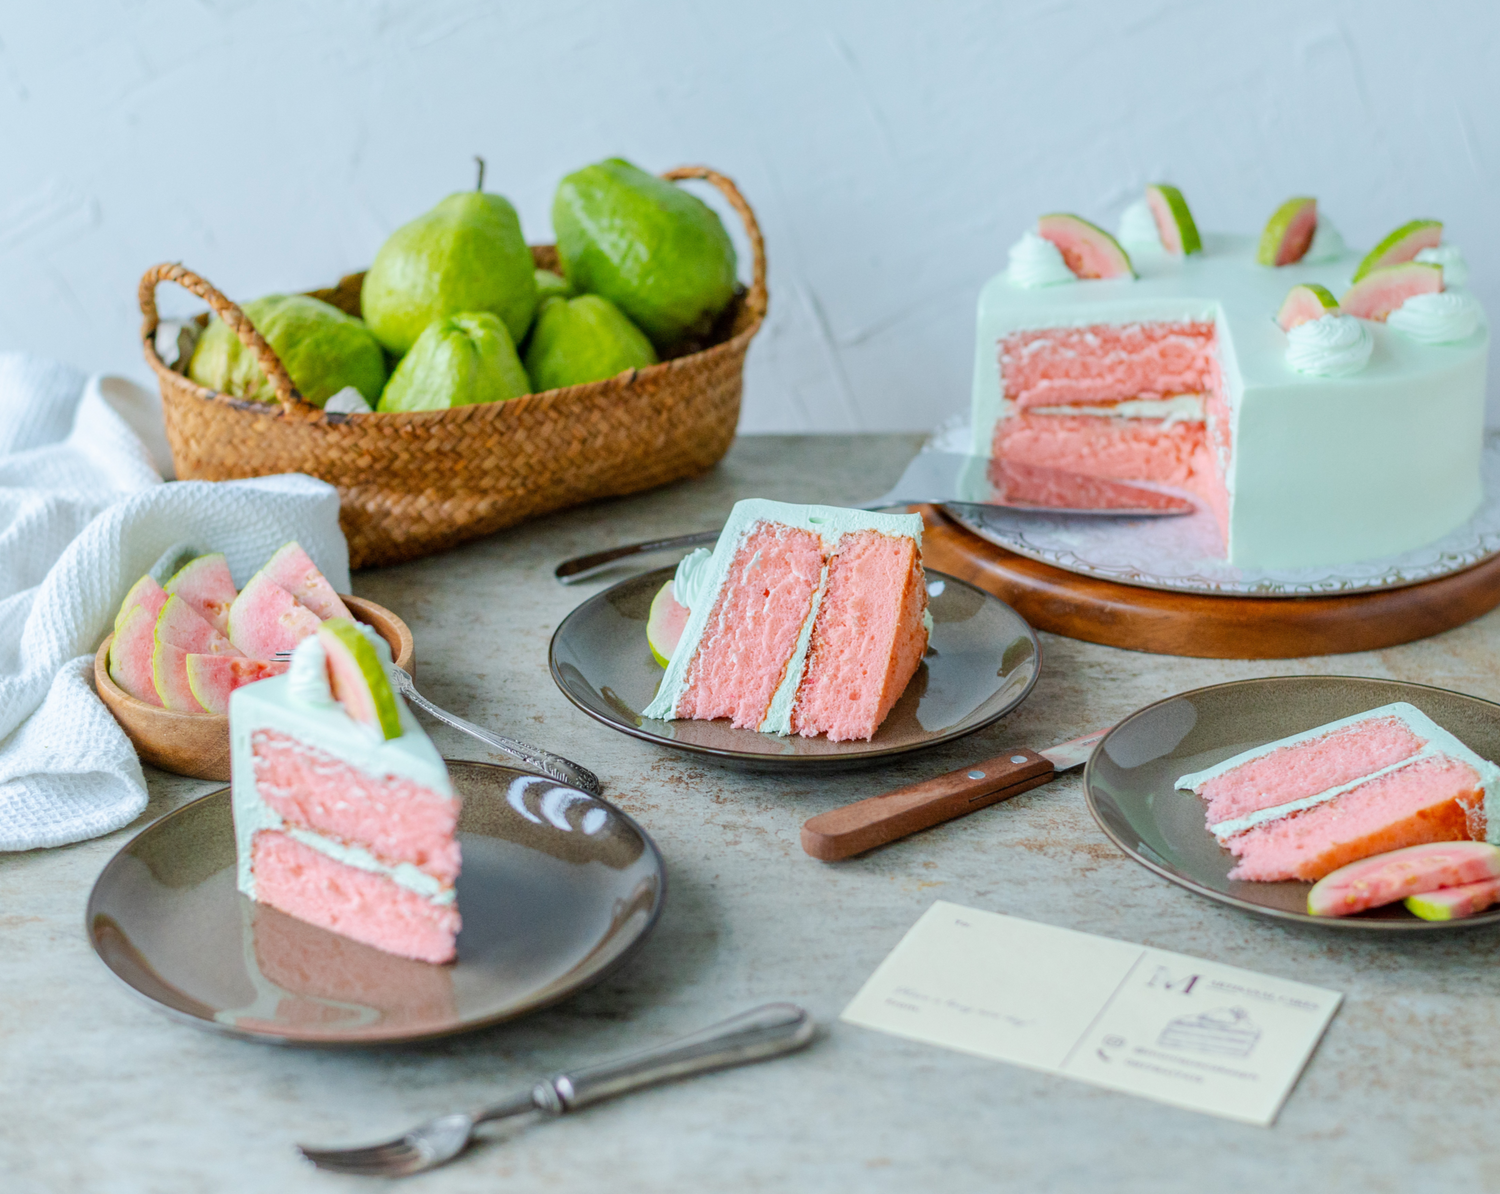 Chiffon cake, guava jam, buttercream frosting, fresh guava slices